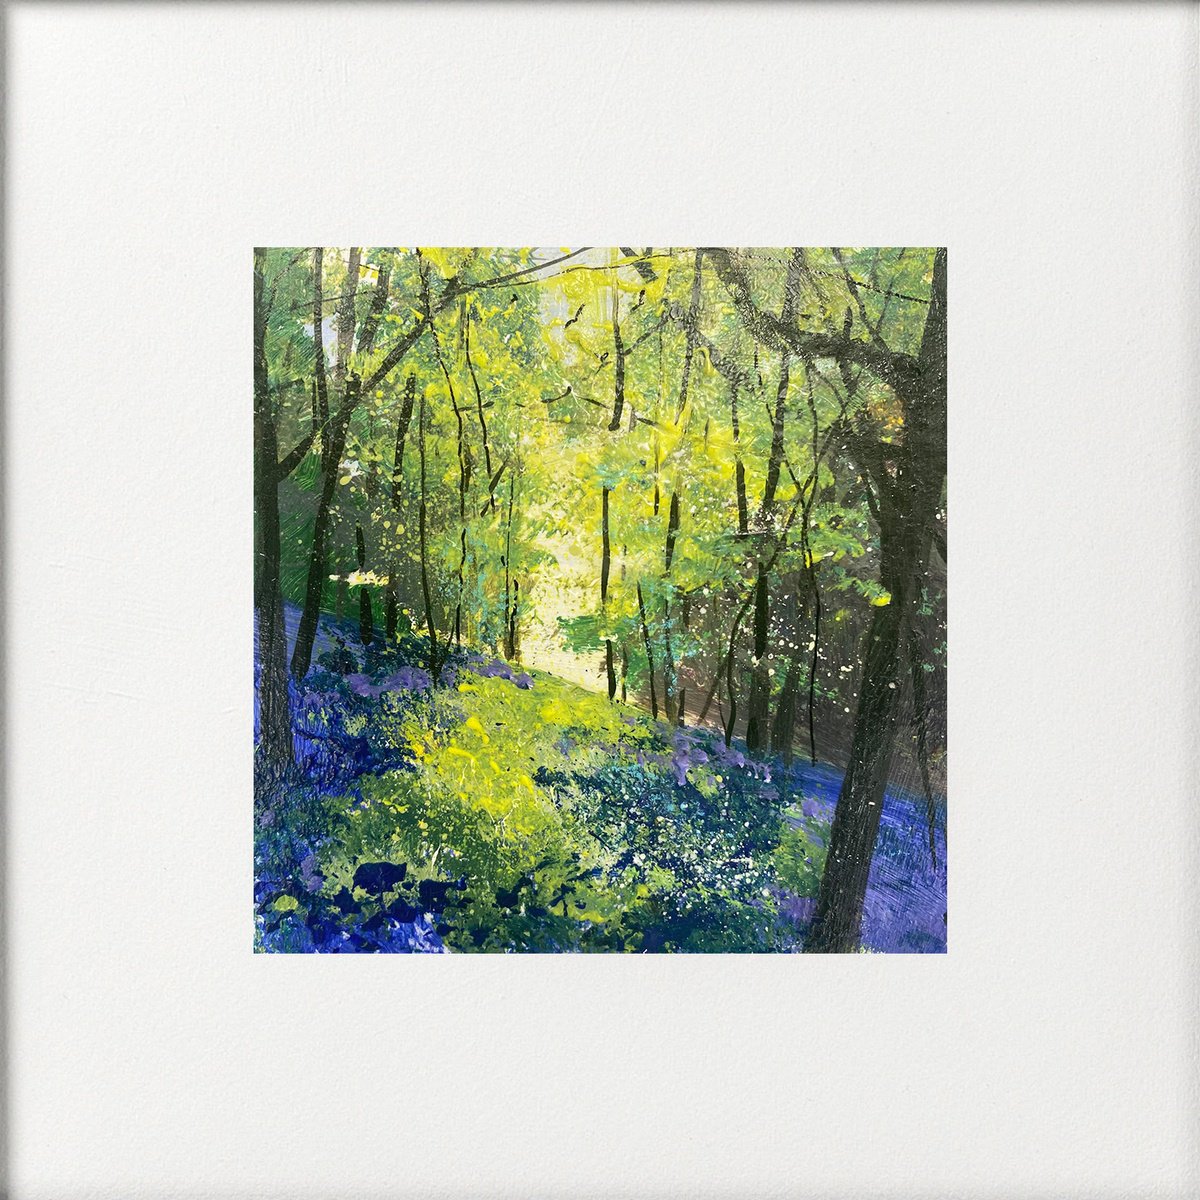 Seasons - Spring Bluebells in Abundance by Teresa Tanner